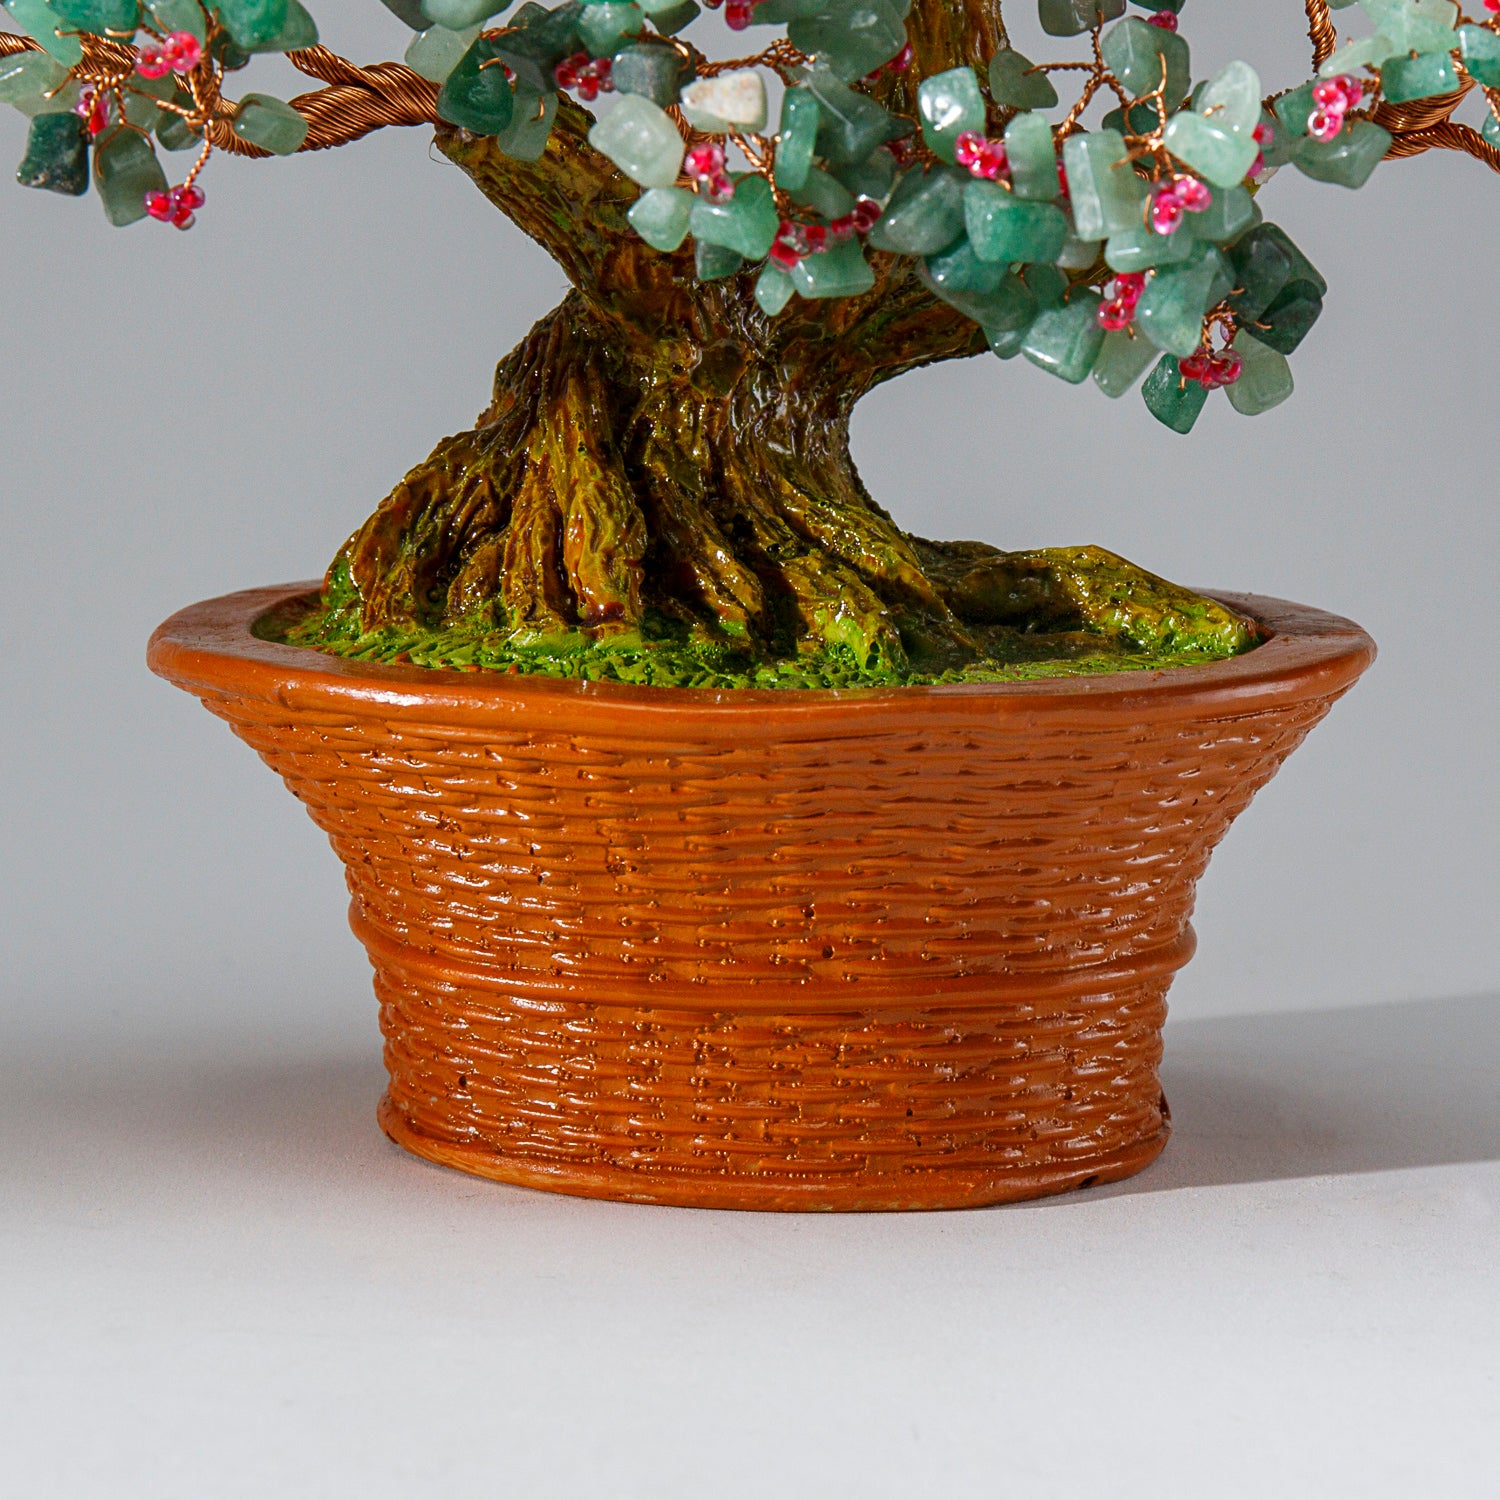 Genuine Green Aventurine with Rose Quartz Beads Bonsai Tree in Round Basket Ceramic Pot (9” Tall)